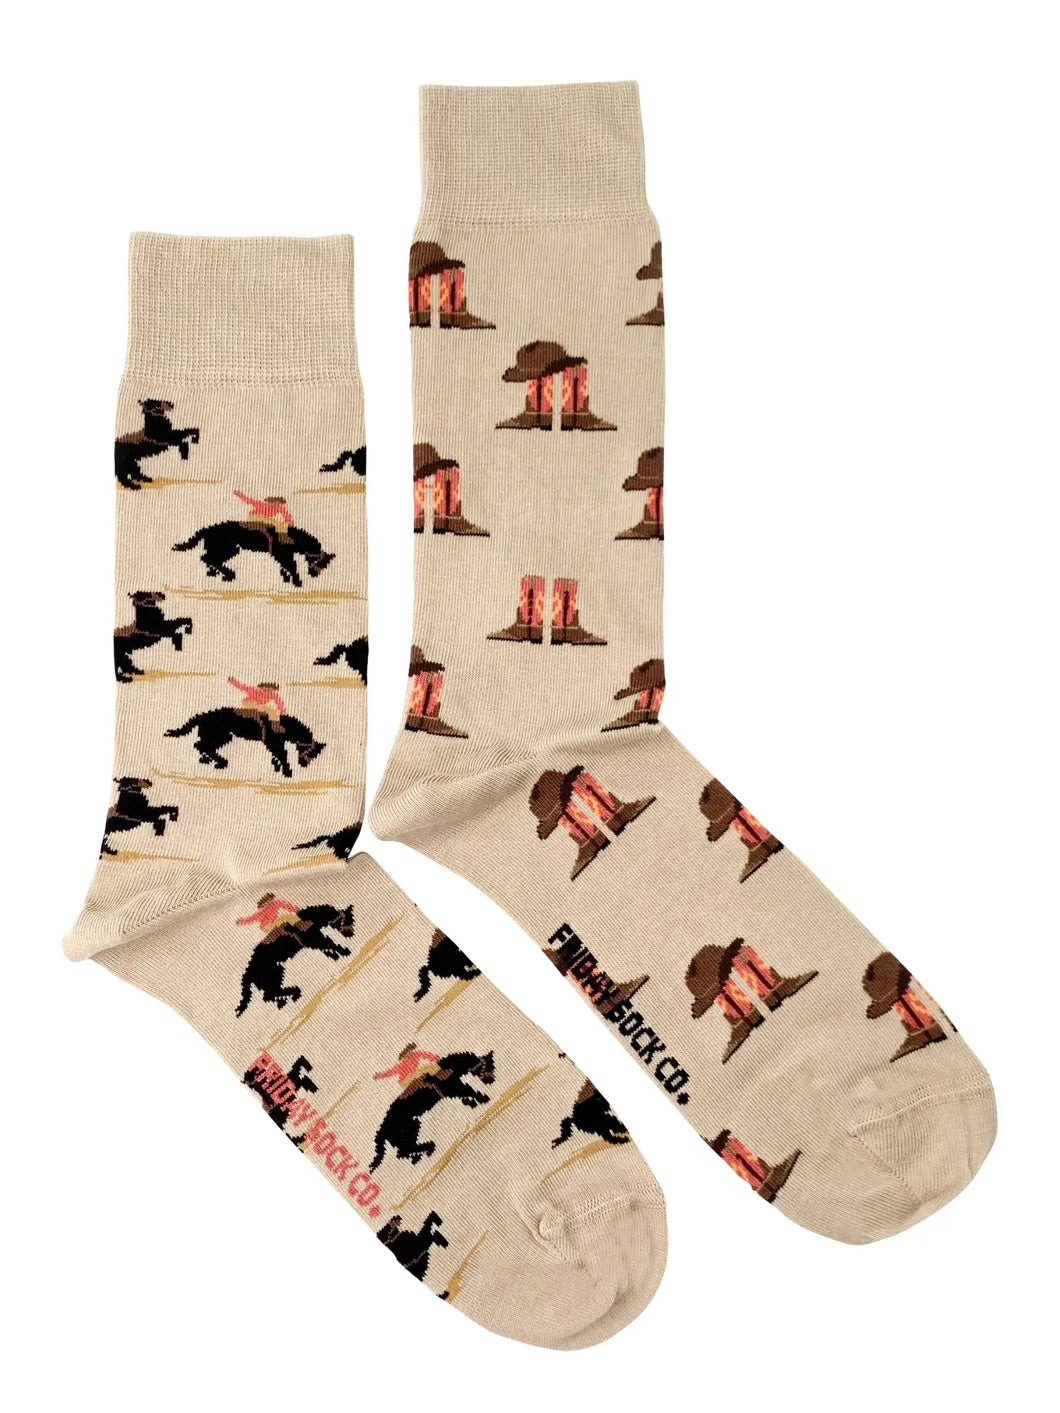 men's socks - western